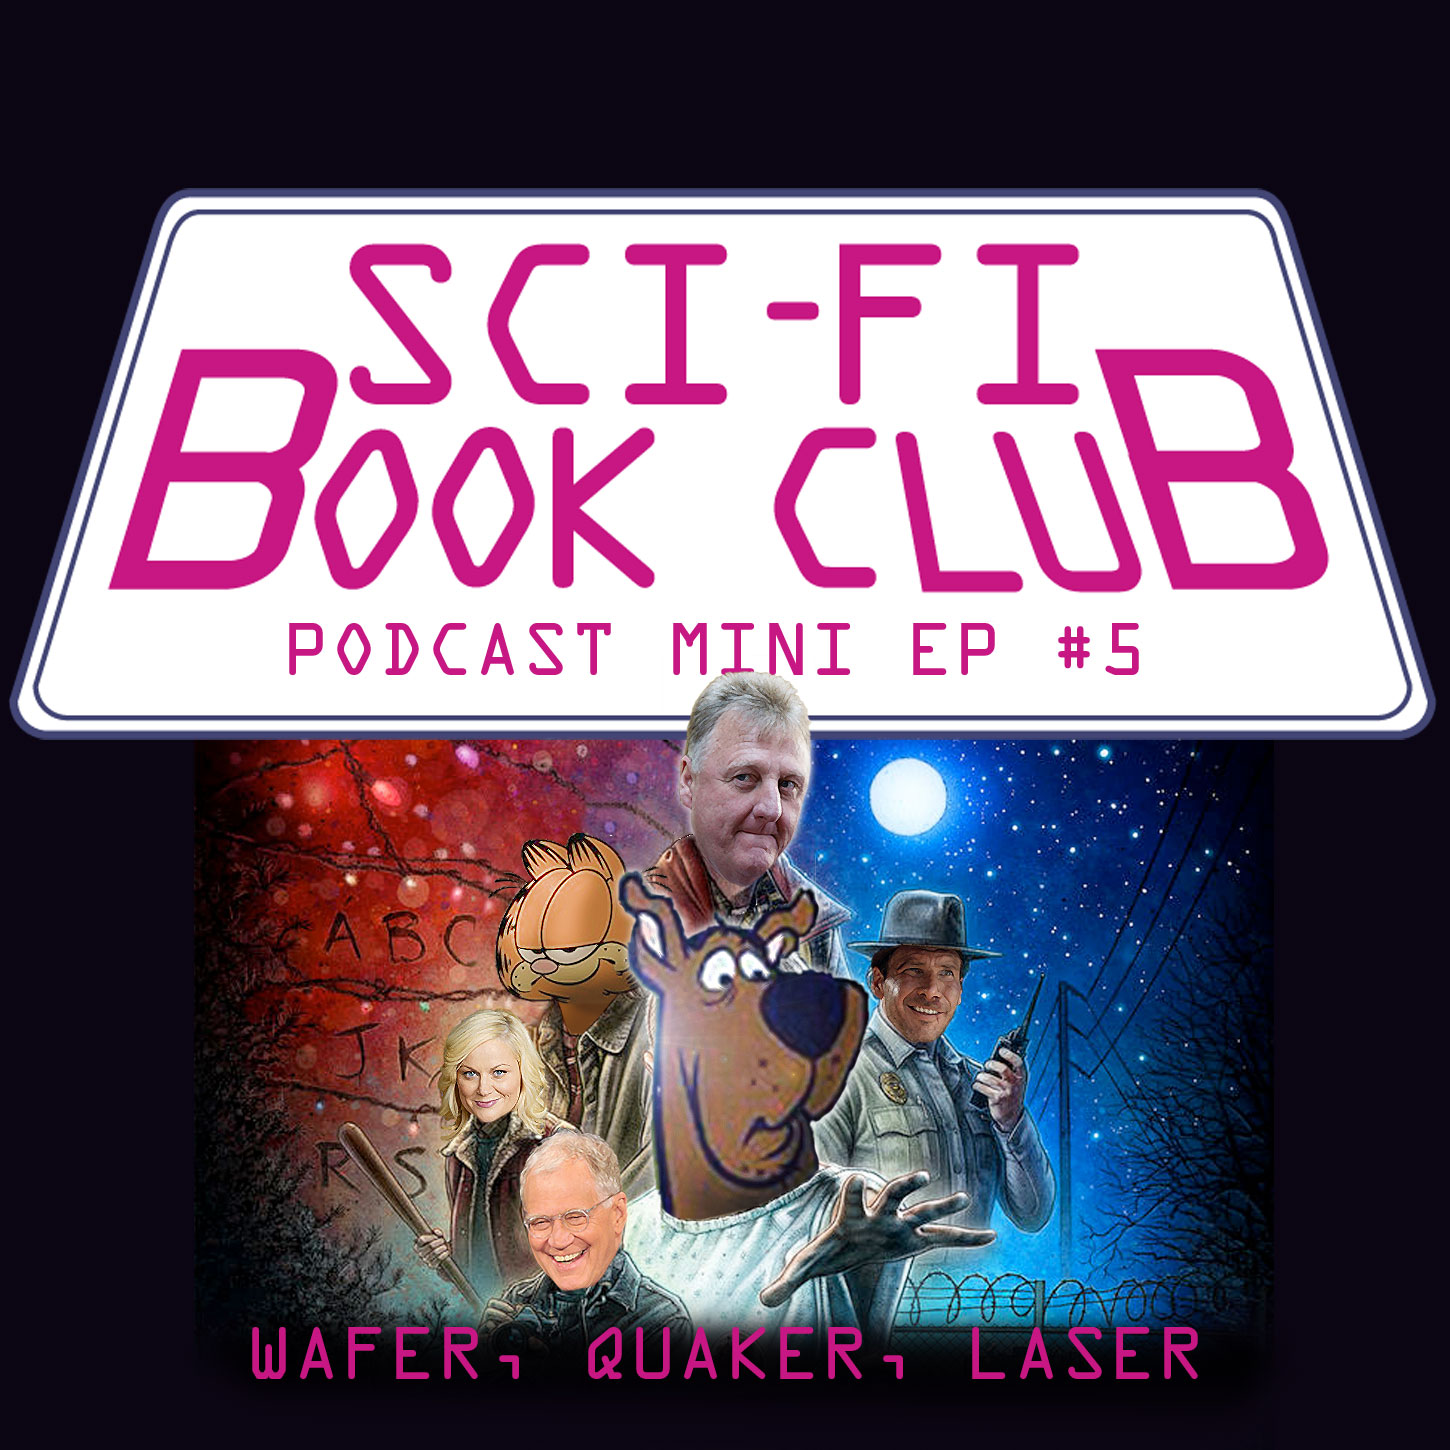 Sci-Fi Book Club Podcast Mini Ep #5: Wafer, Quaker, Laser